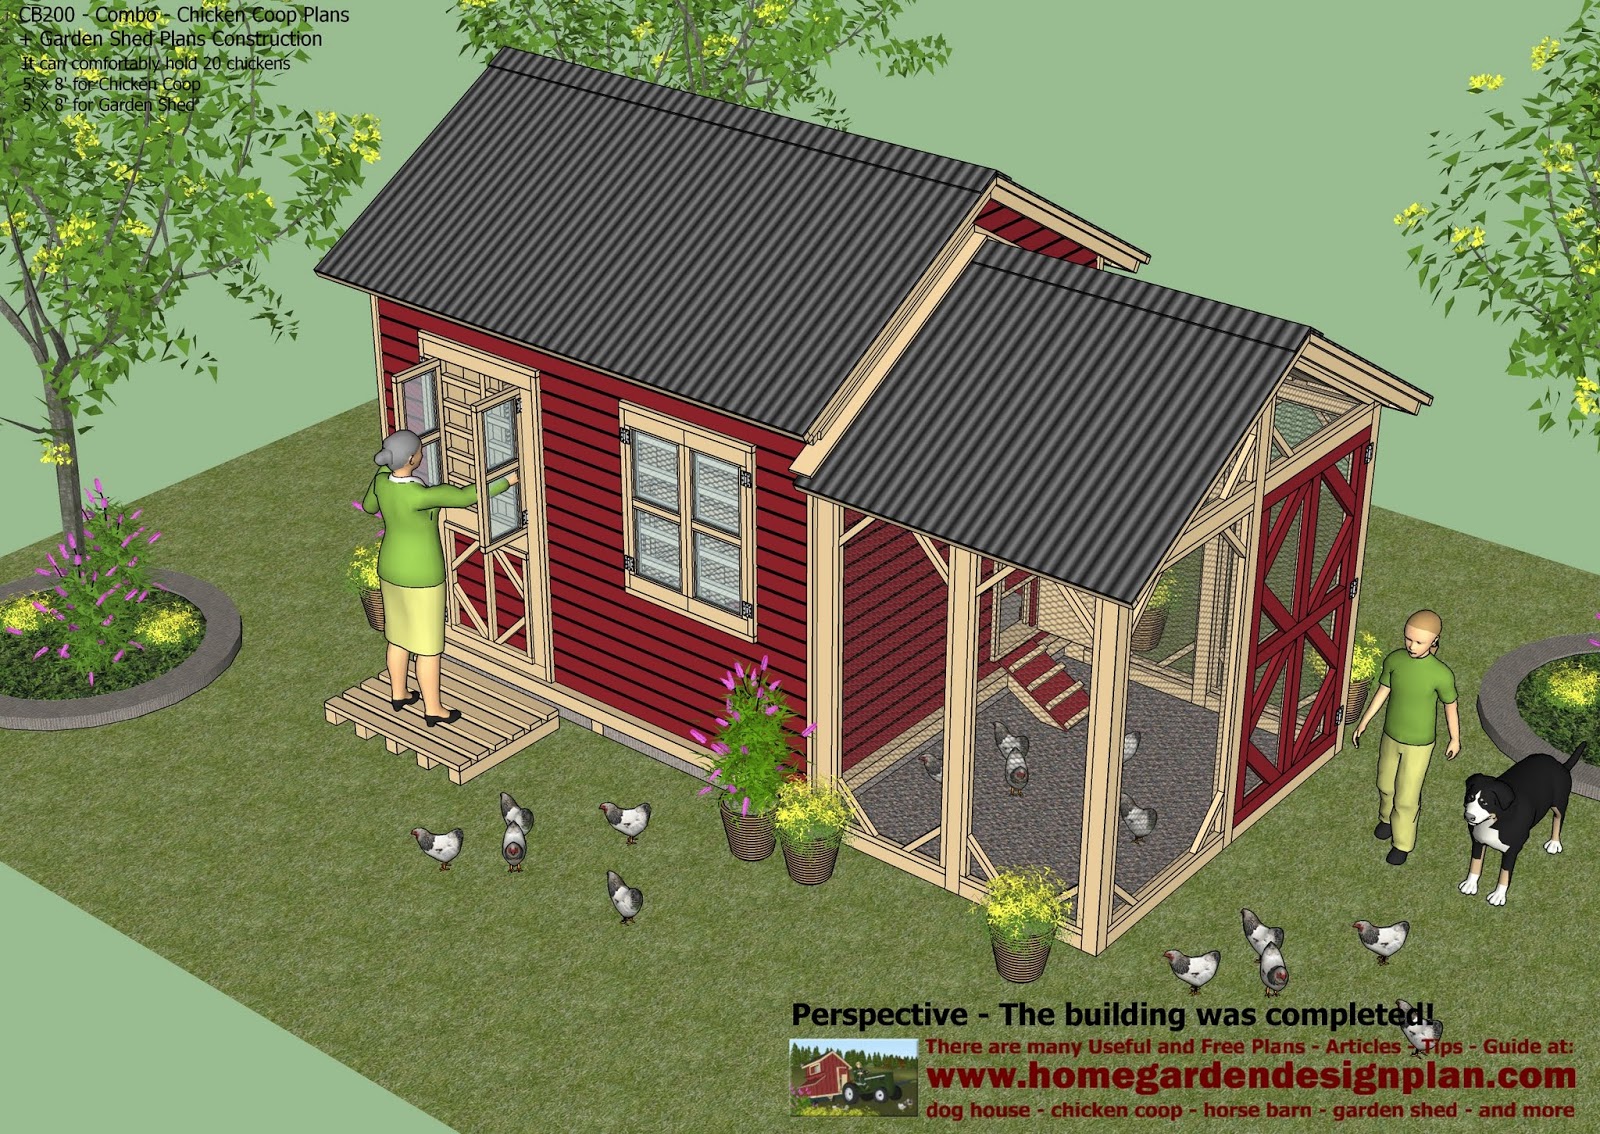 home garden plans: cb200 - combo plans - chicken coop